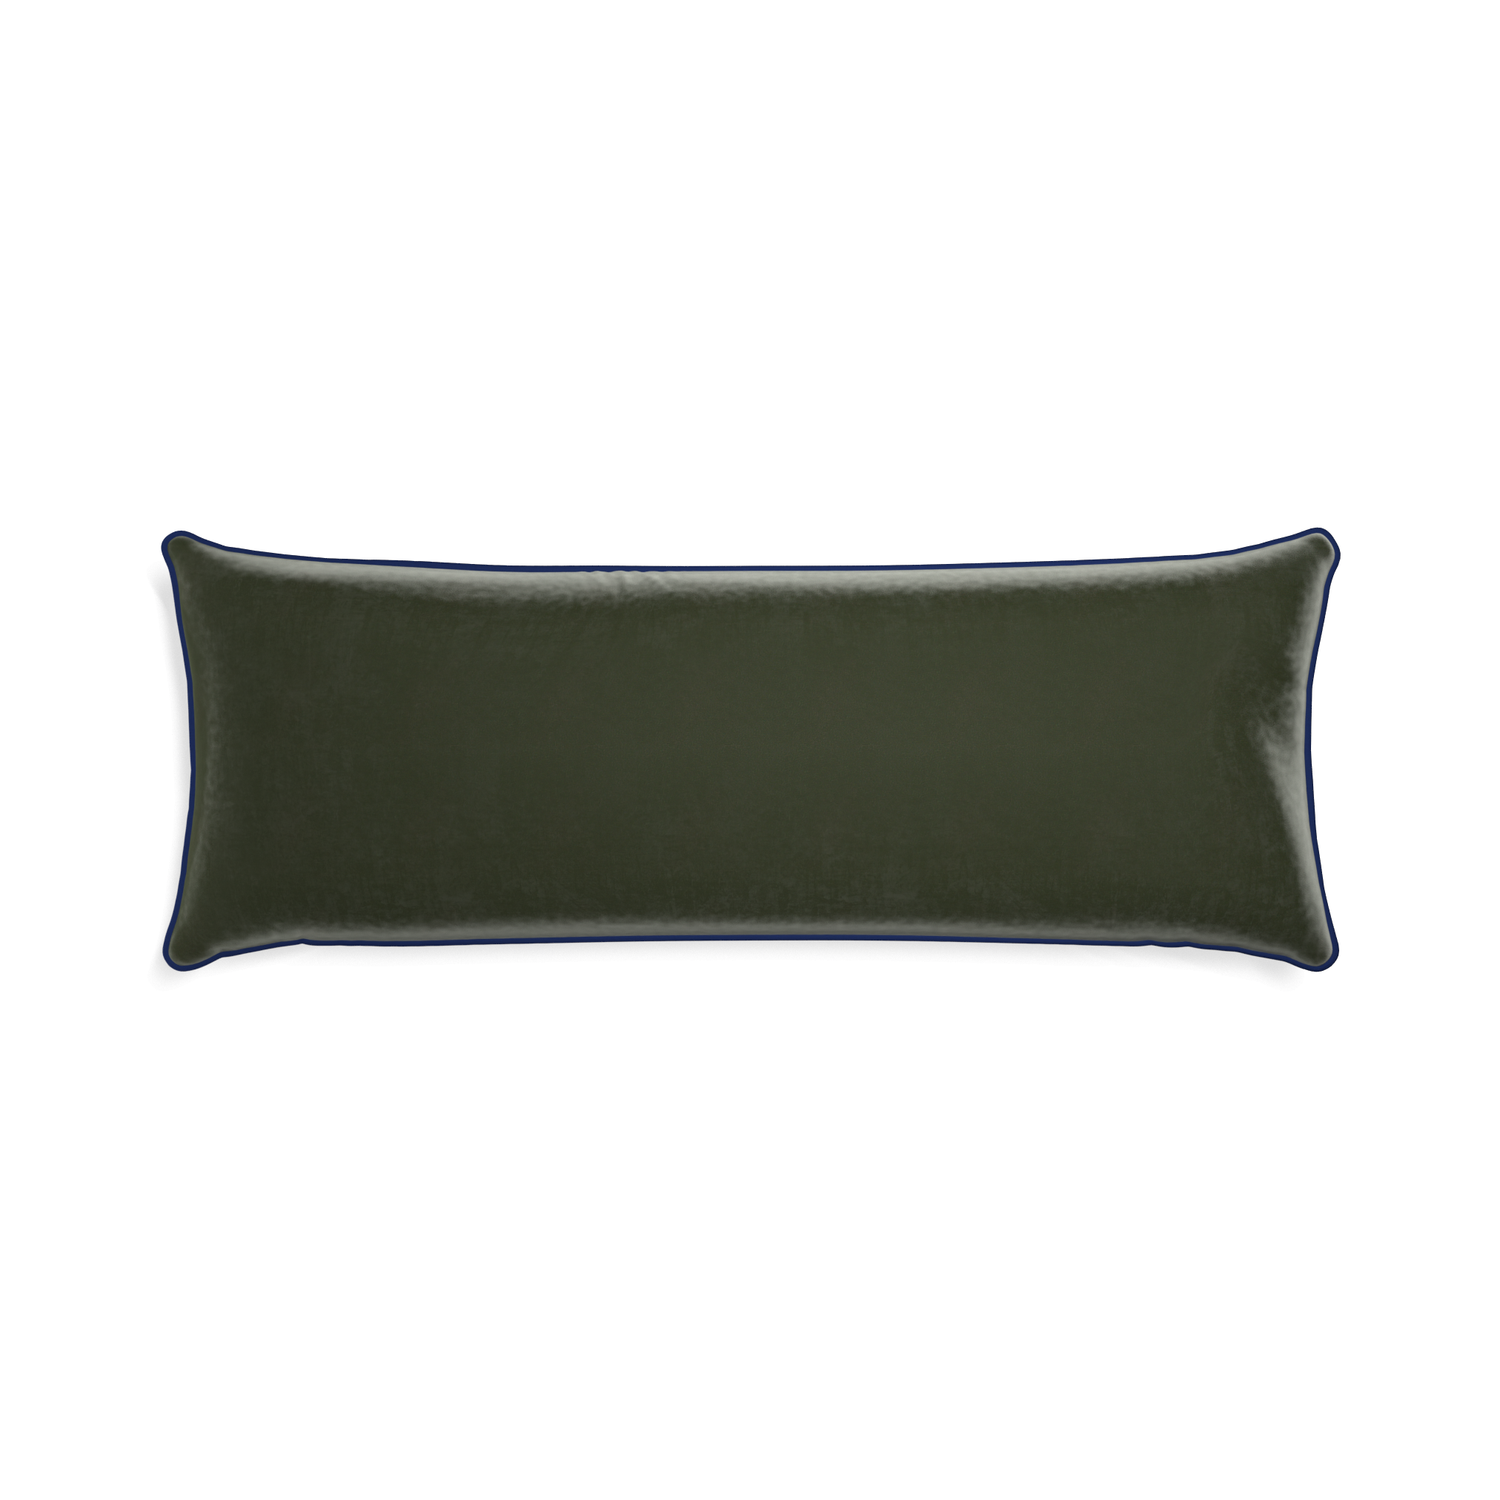 Xl-lumbar fern velvet custom pillow with midnight piping on white background